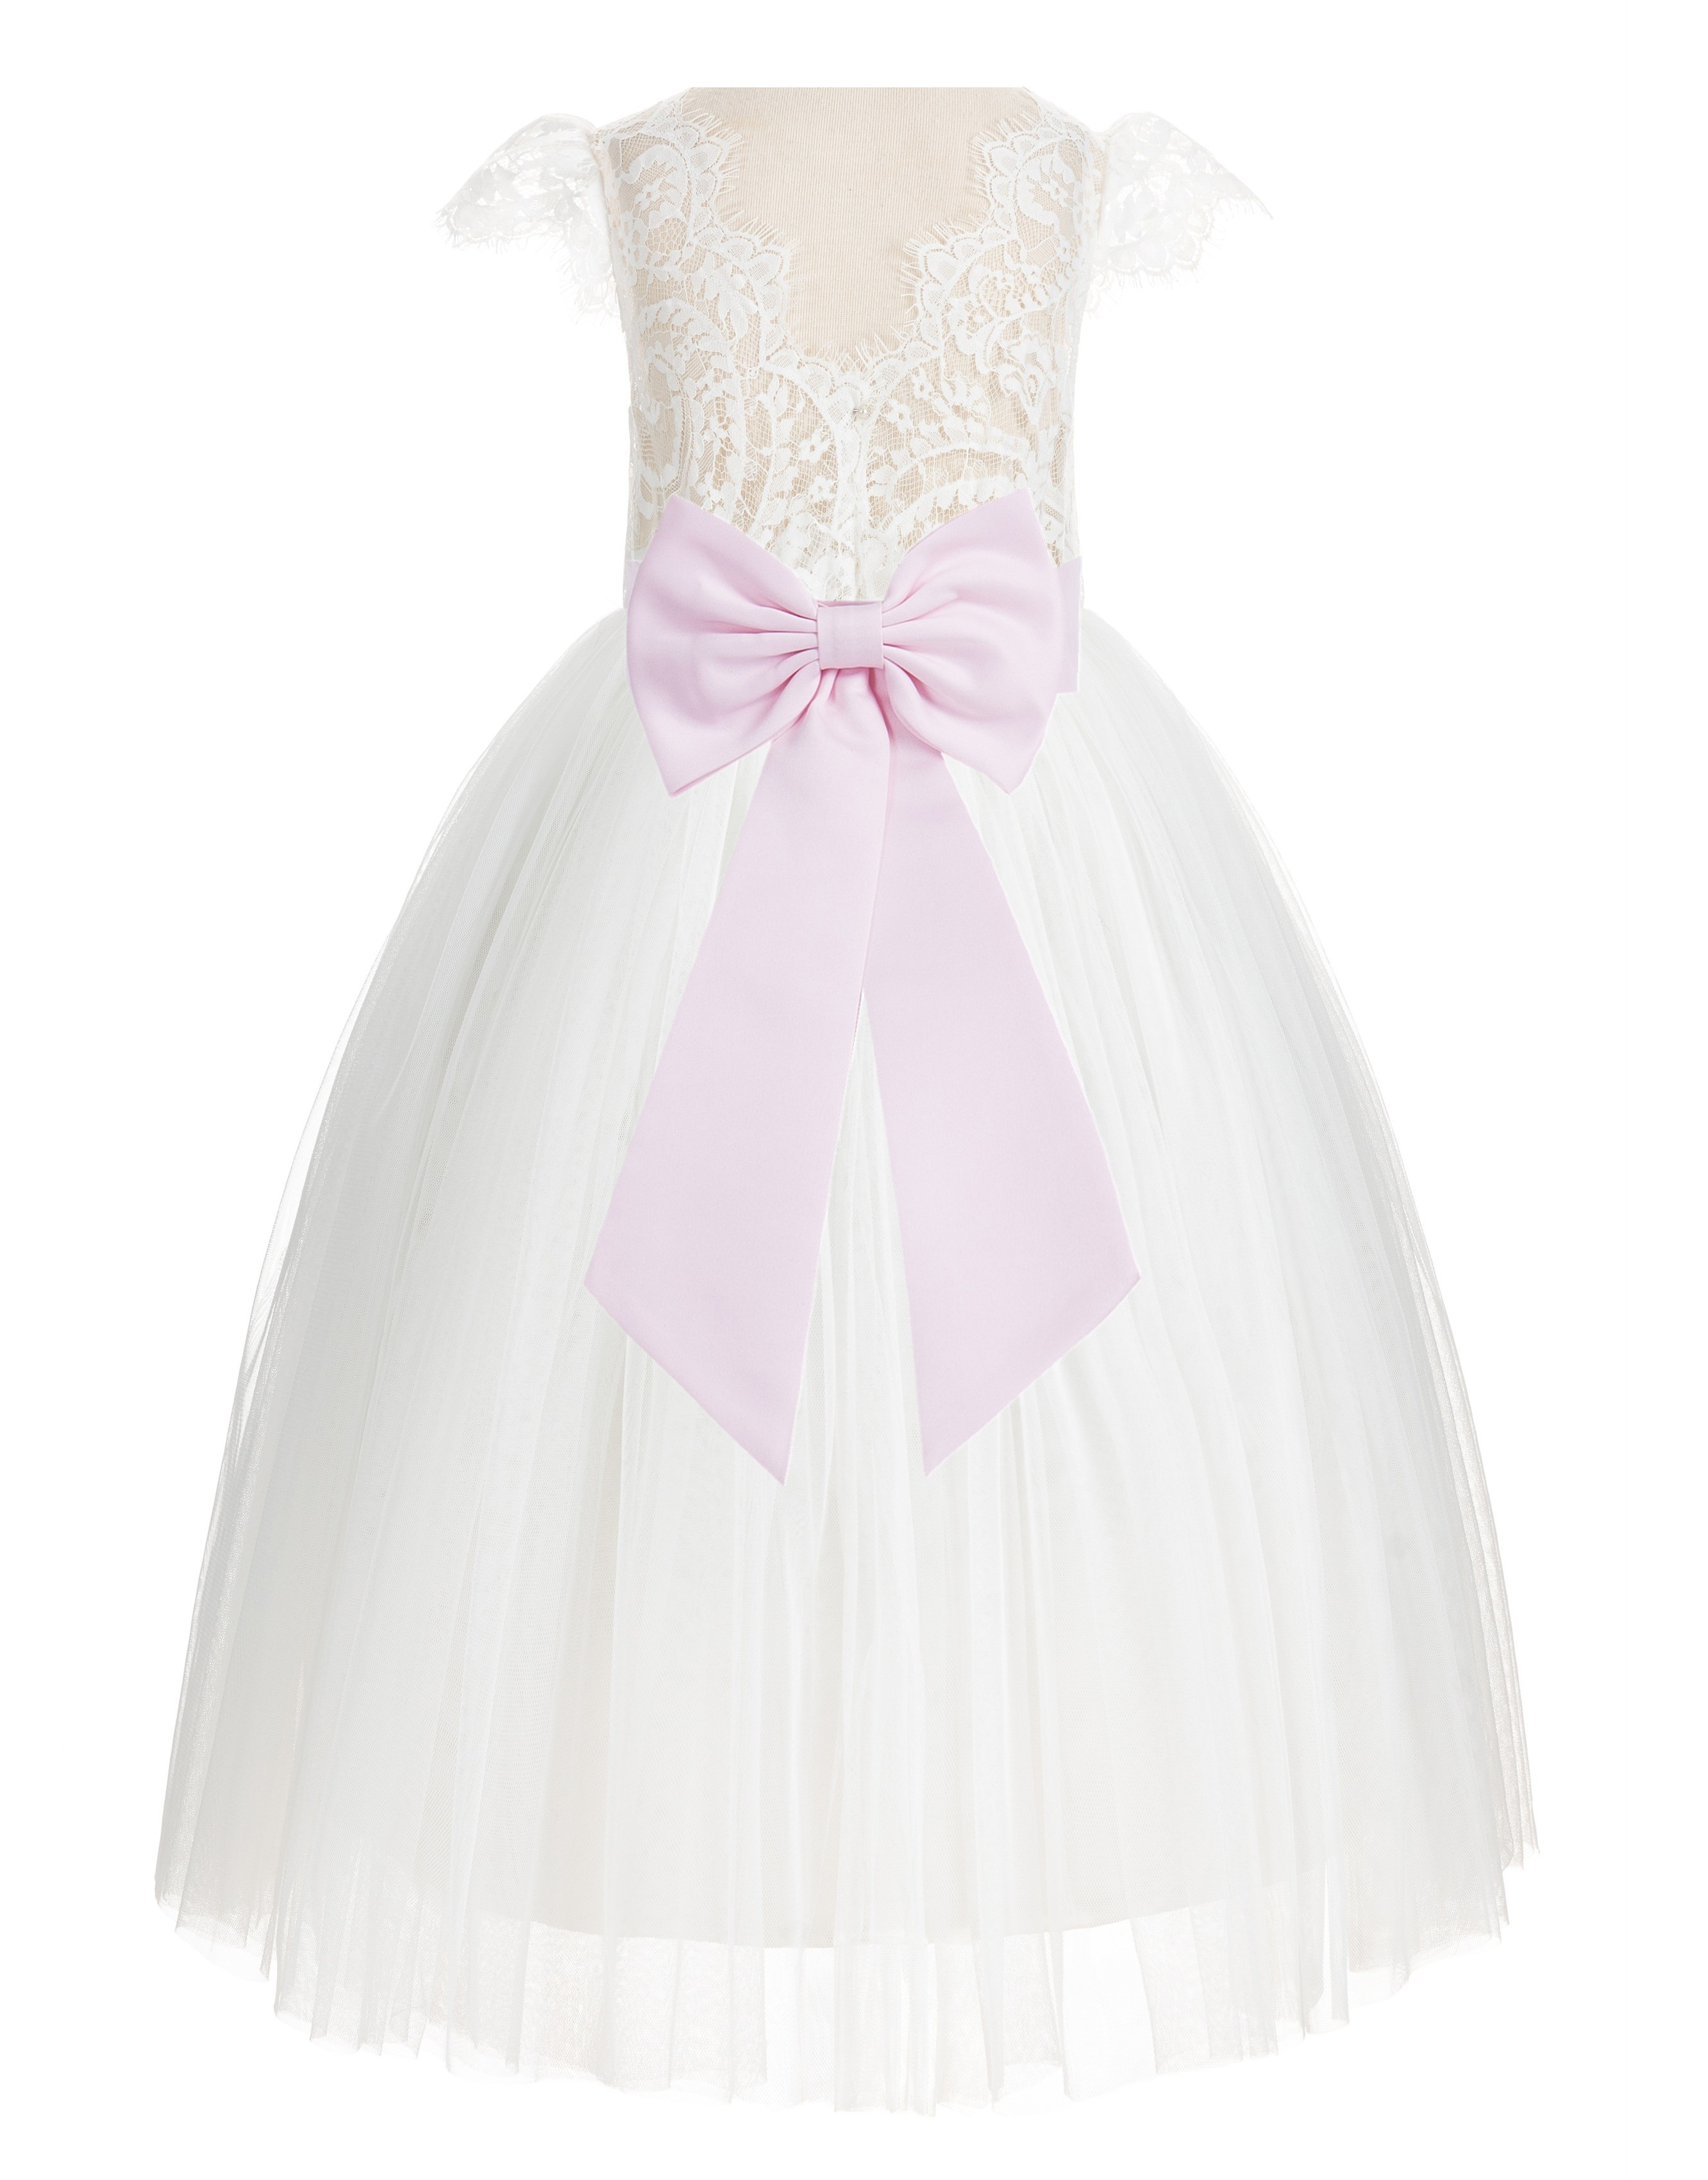 Ivory / Pink Cap Sleeves Lace Flower Girl Dress V-Back Lace Dress 622T